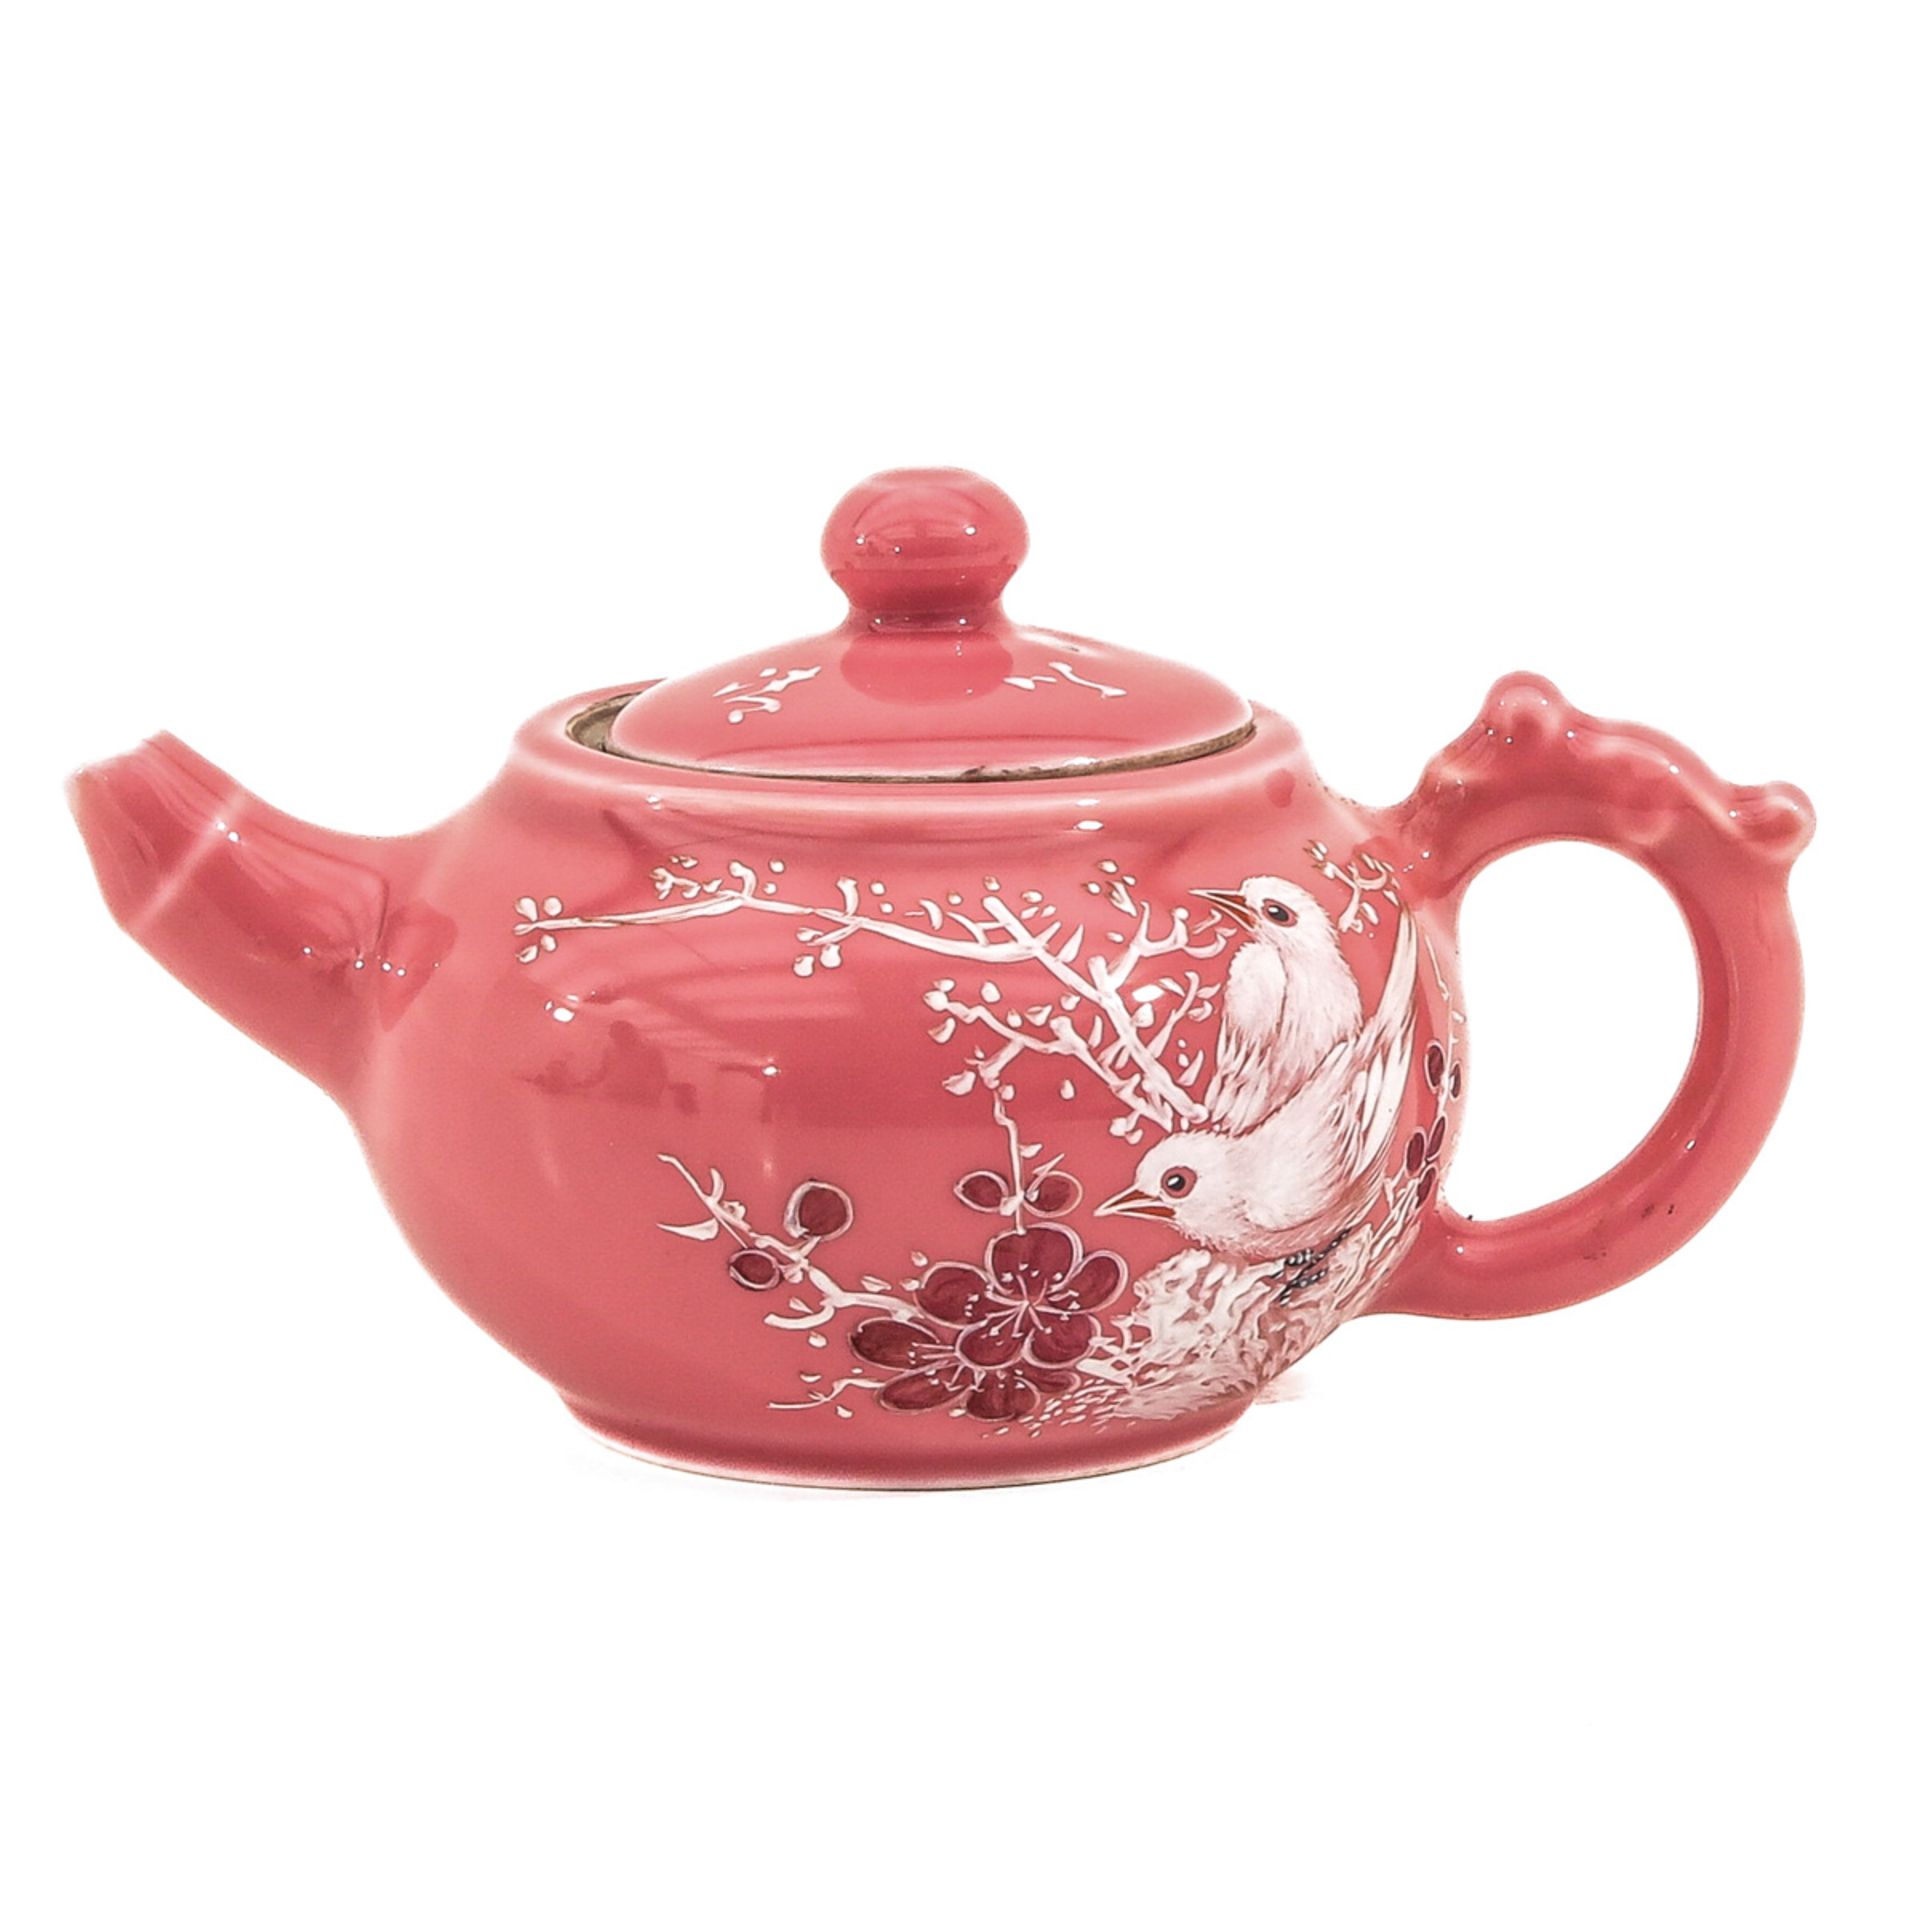 A Pink Glaze Teapot